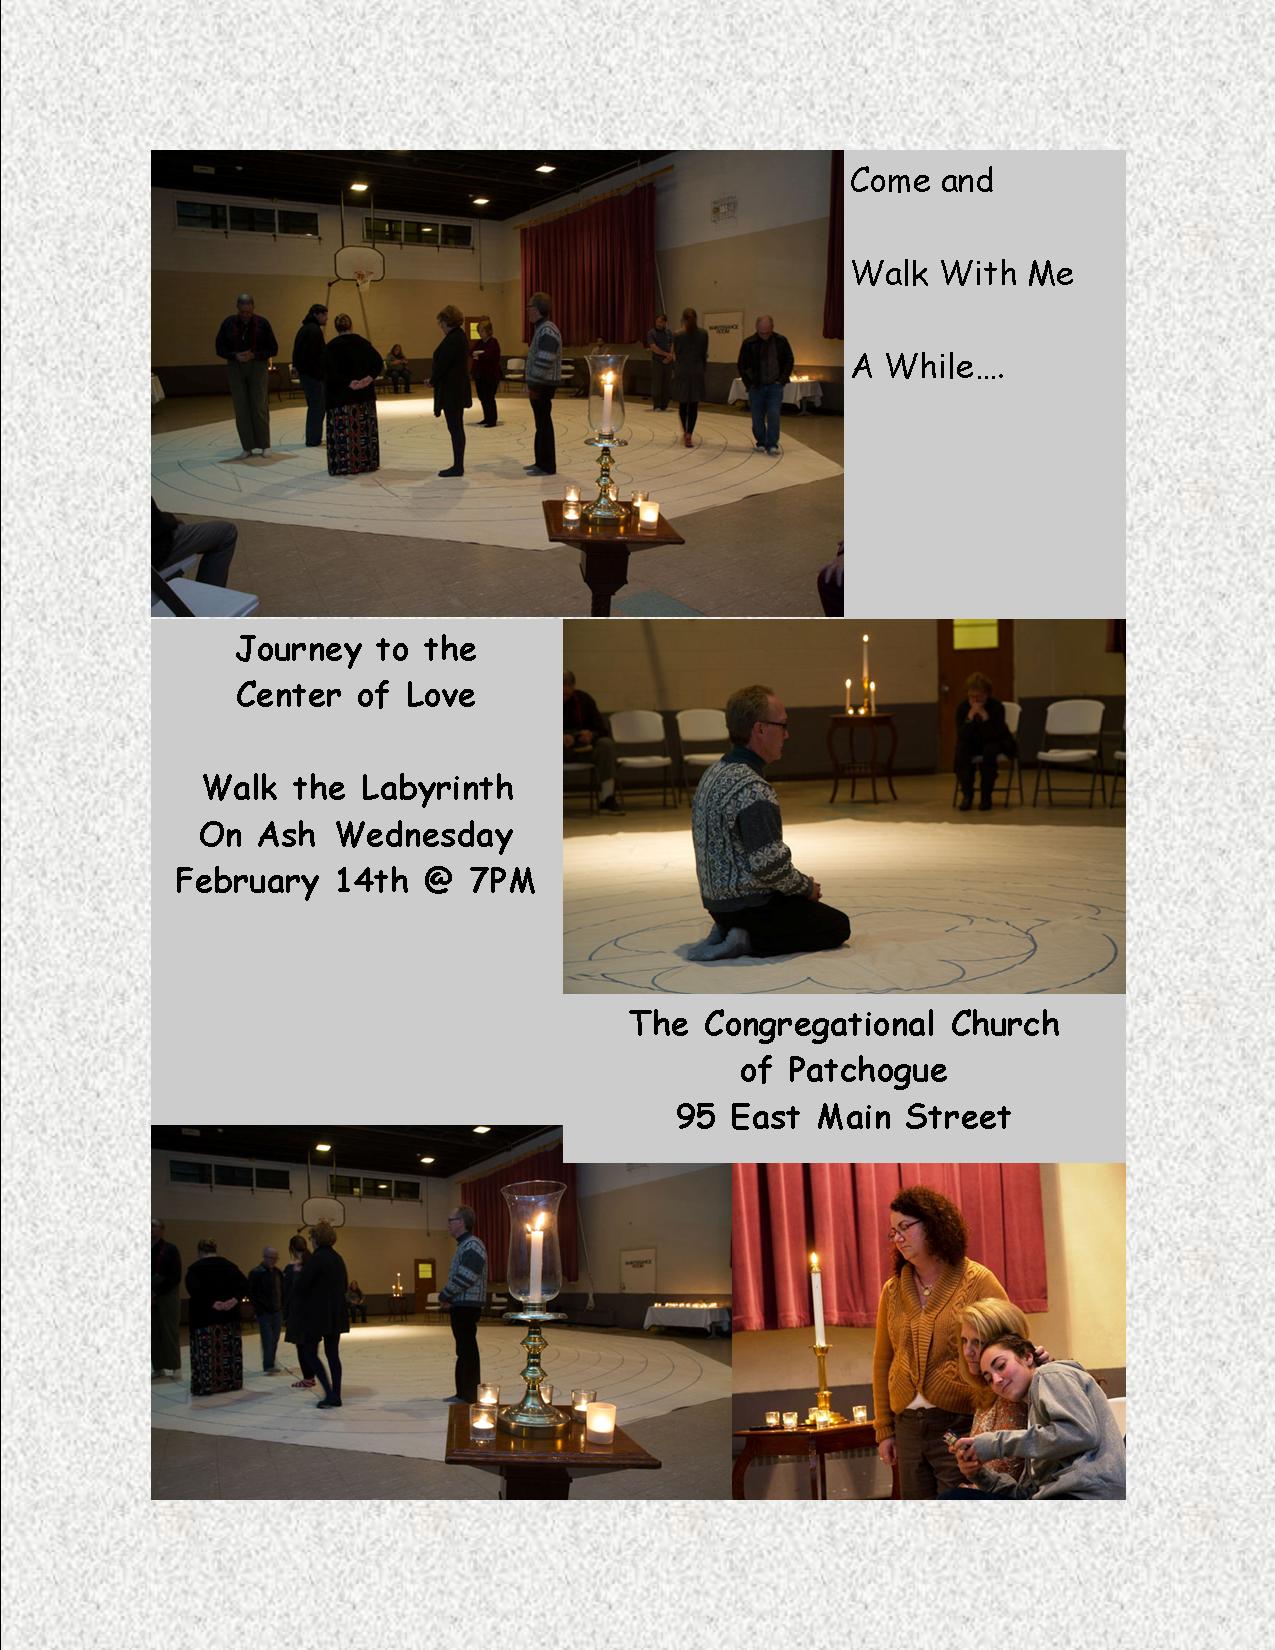 Ash Wednesday Service & Walk the Labyrinth